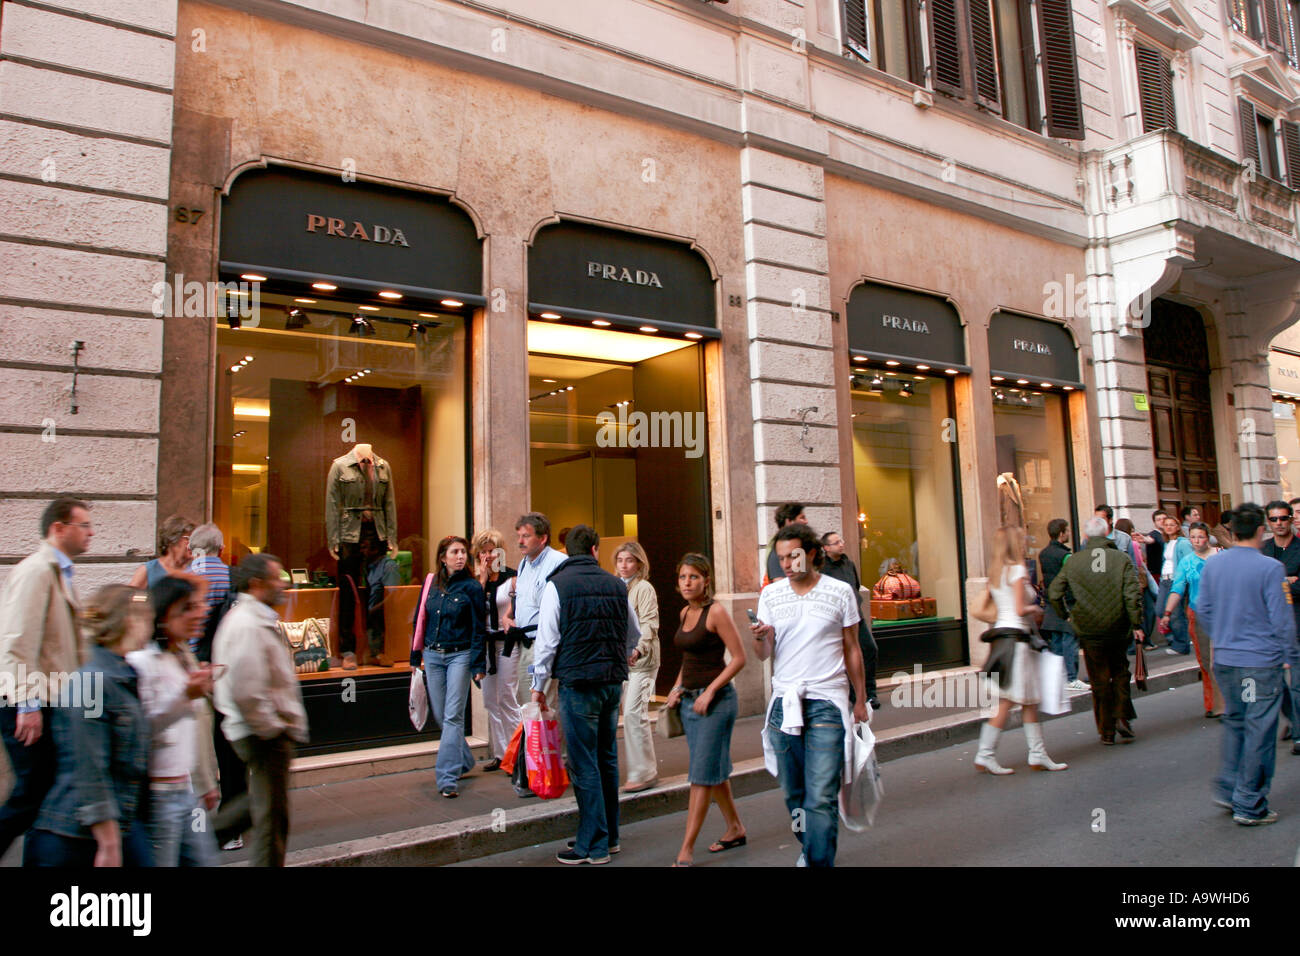 Prada shop in Rome Italy Stock Photo - Alamy